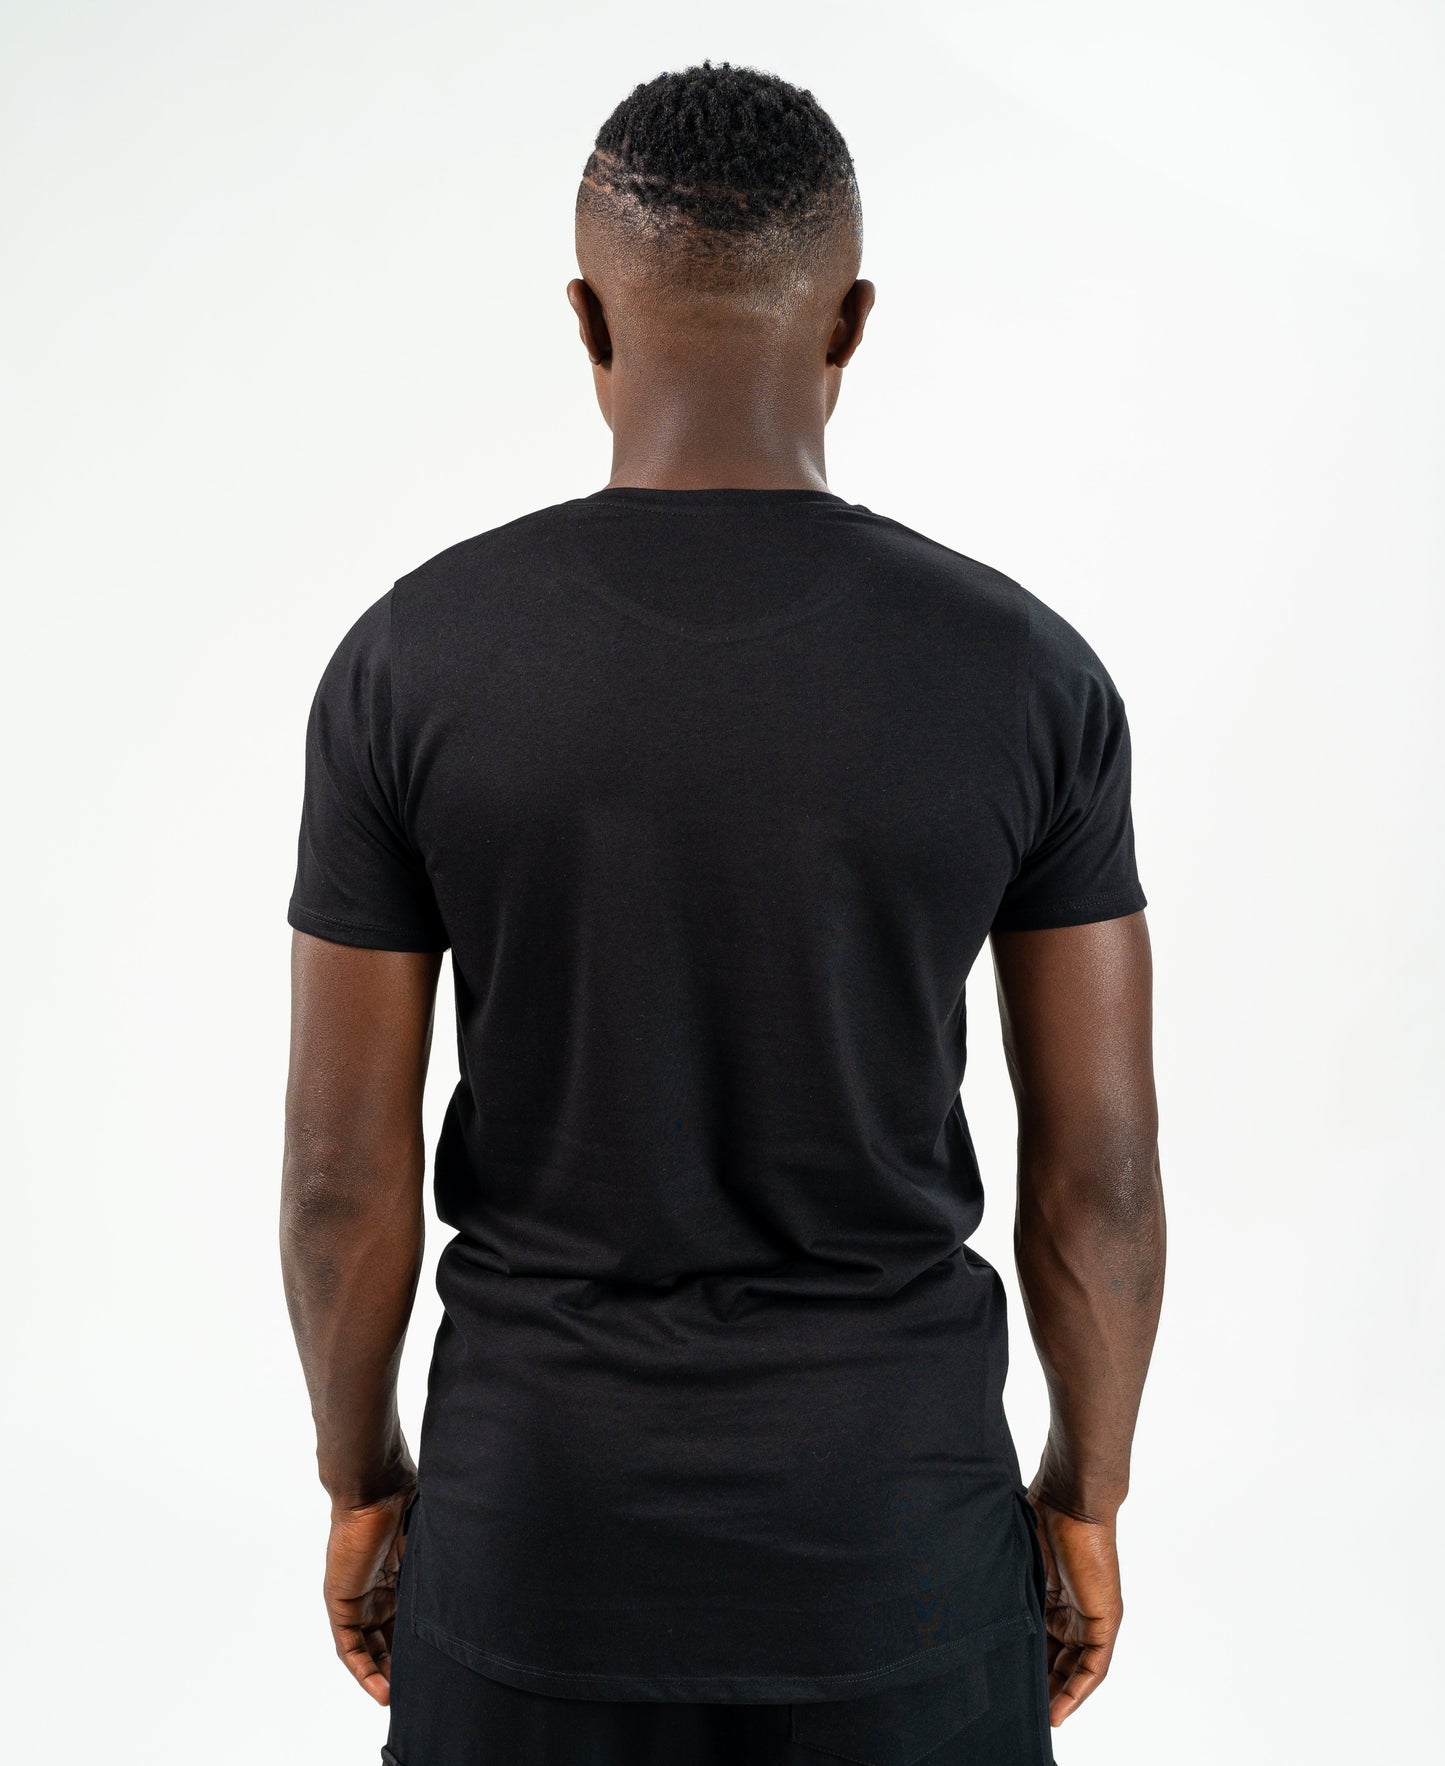 Black t-shirt with black logo - Fatai Style